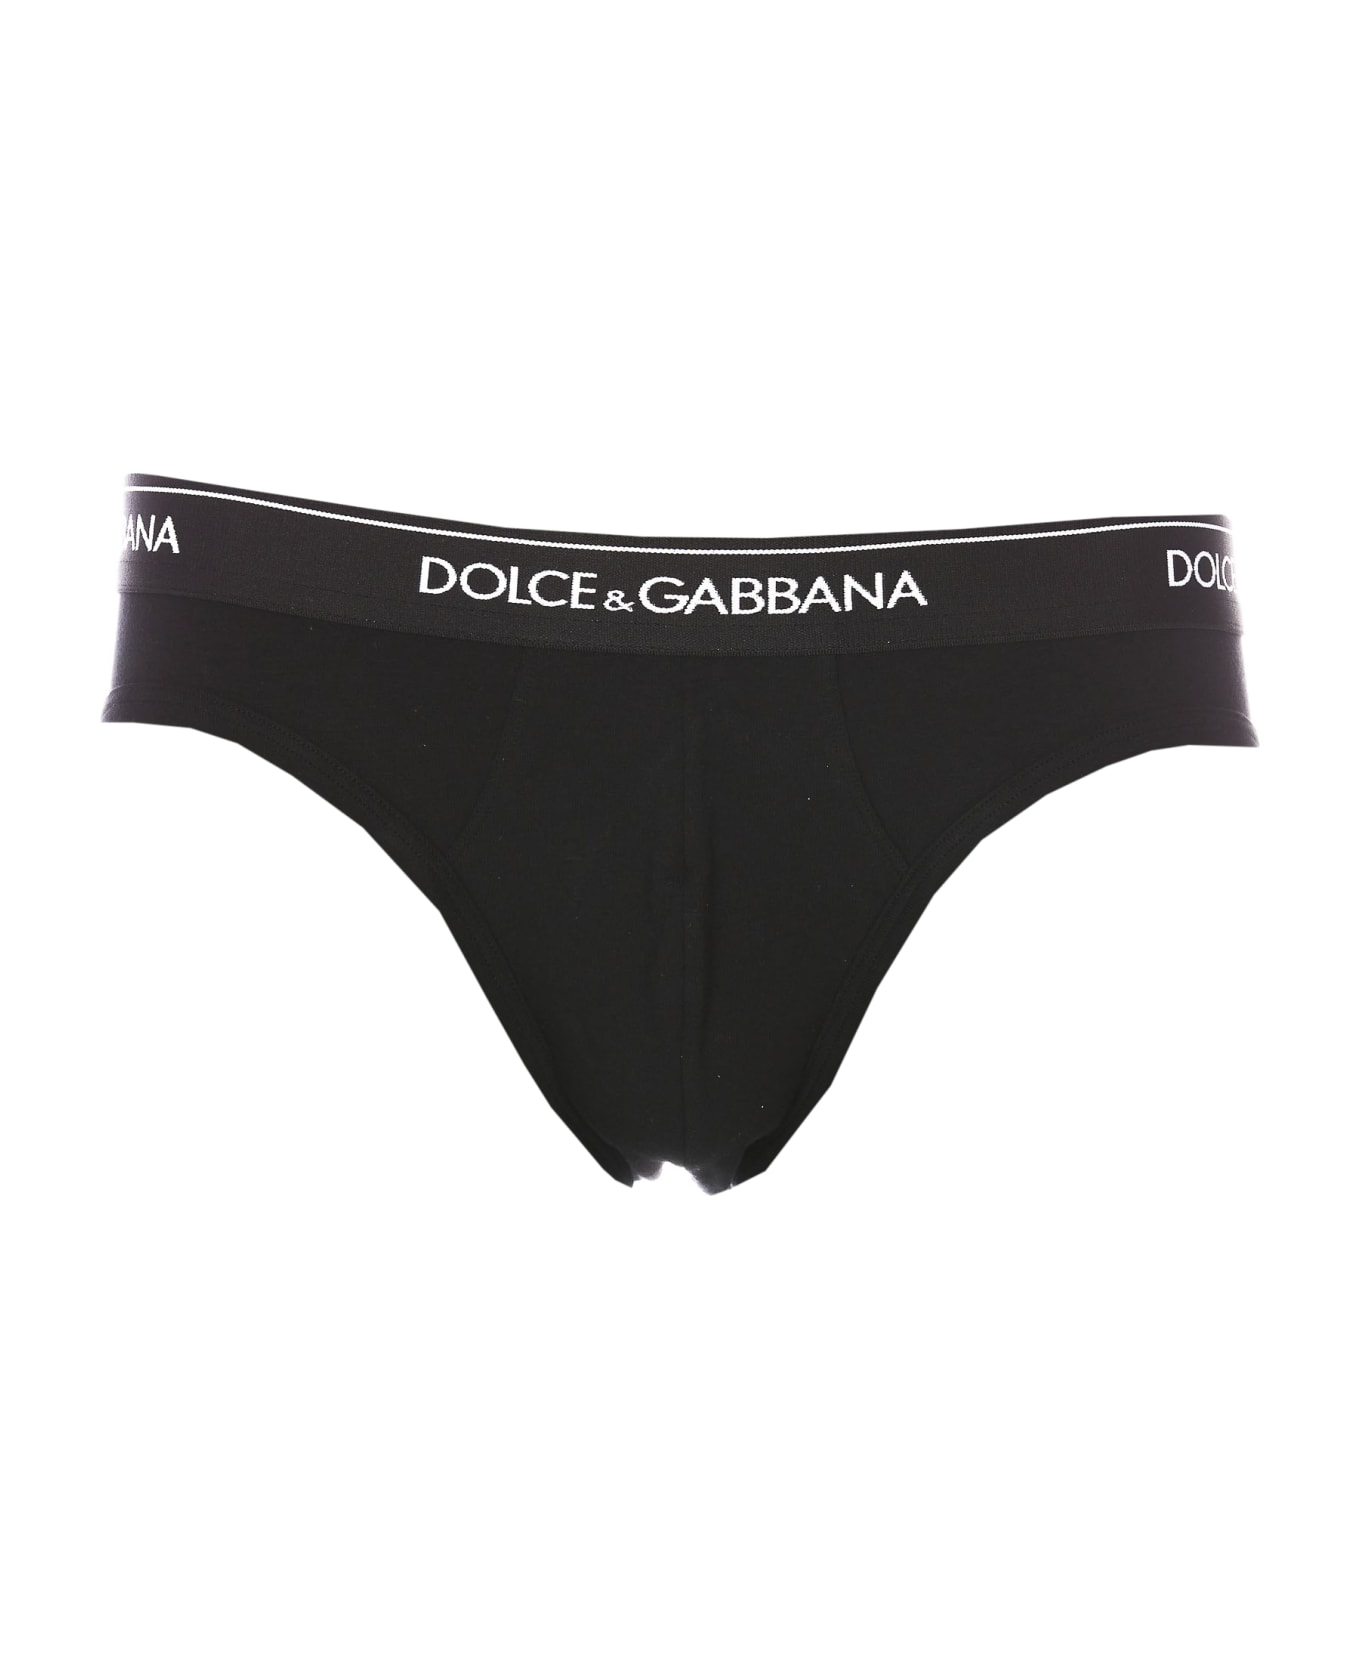 Dolce & Gabbana Logo Bipack Brief - BLACK